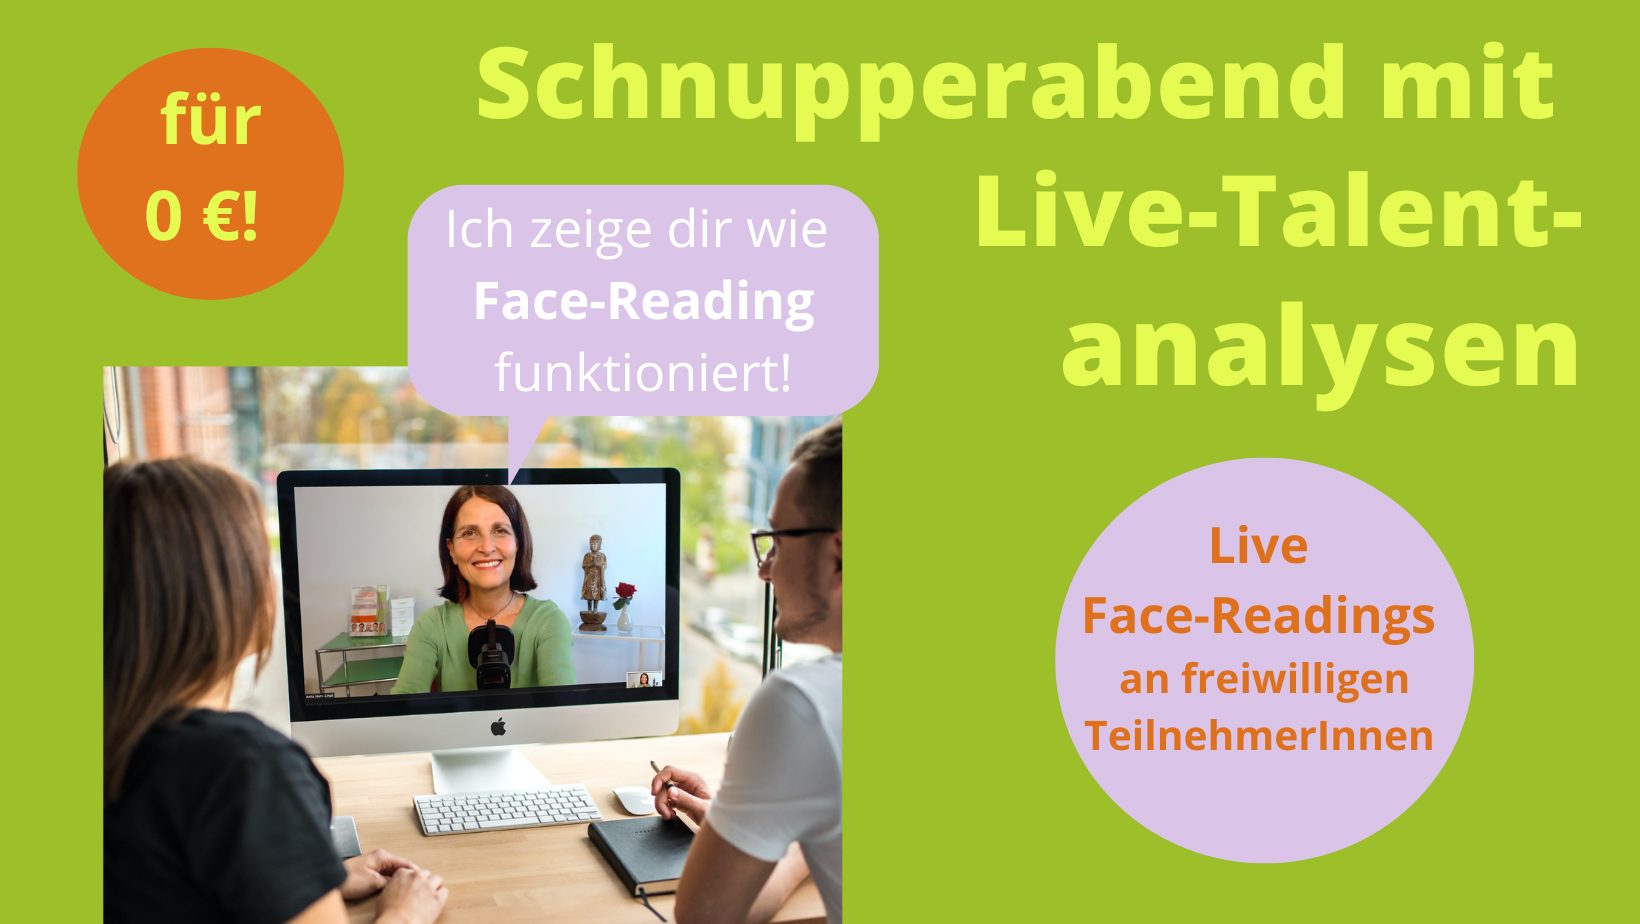 Face-Reading Schnupperabend